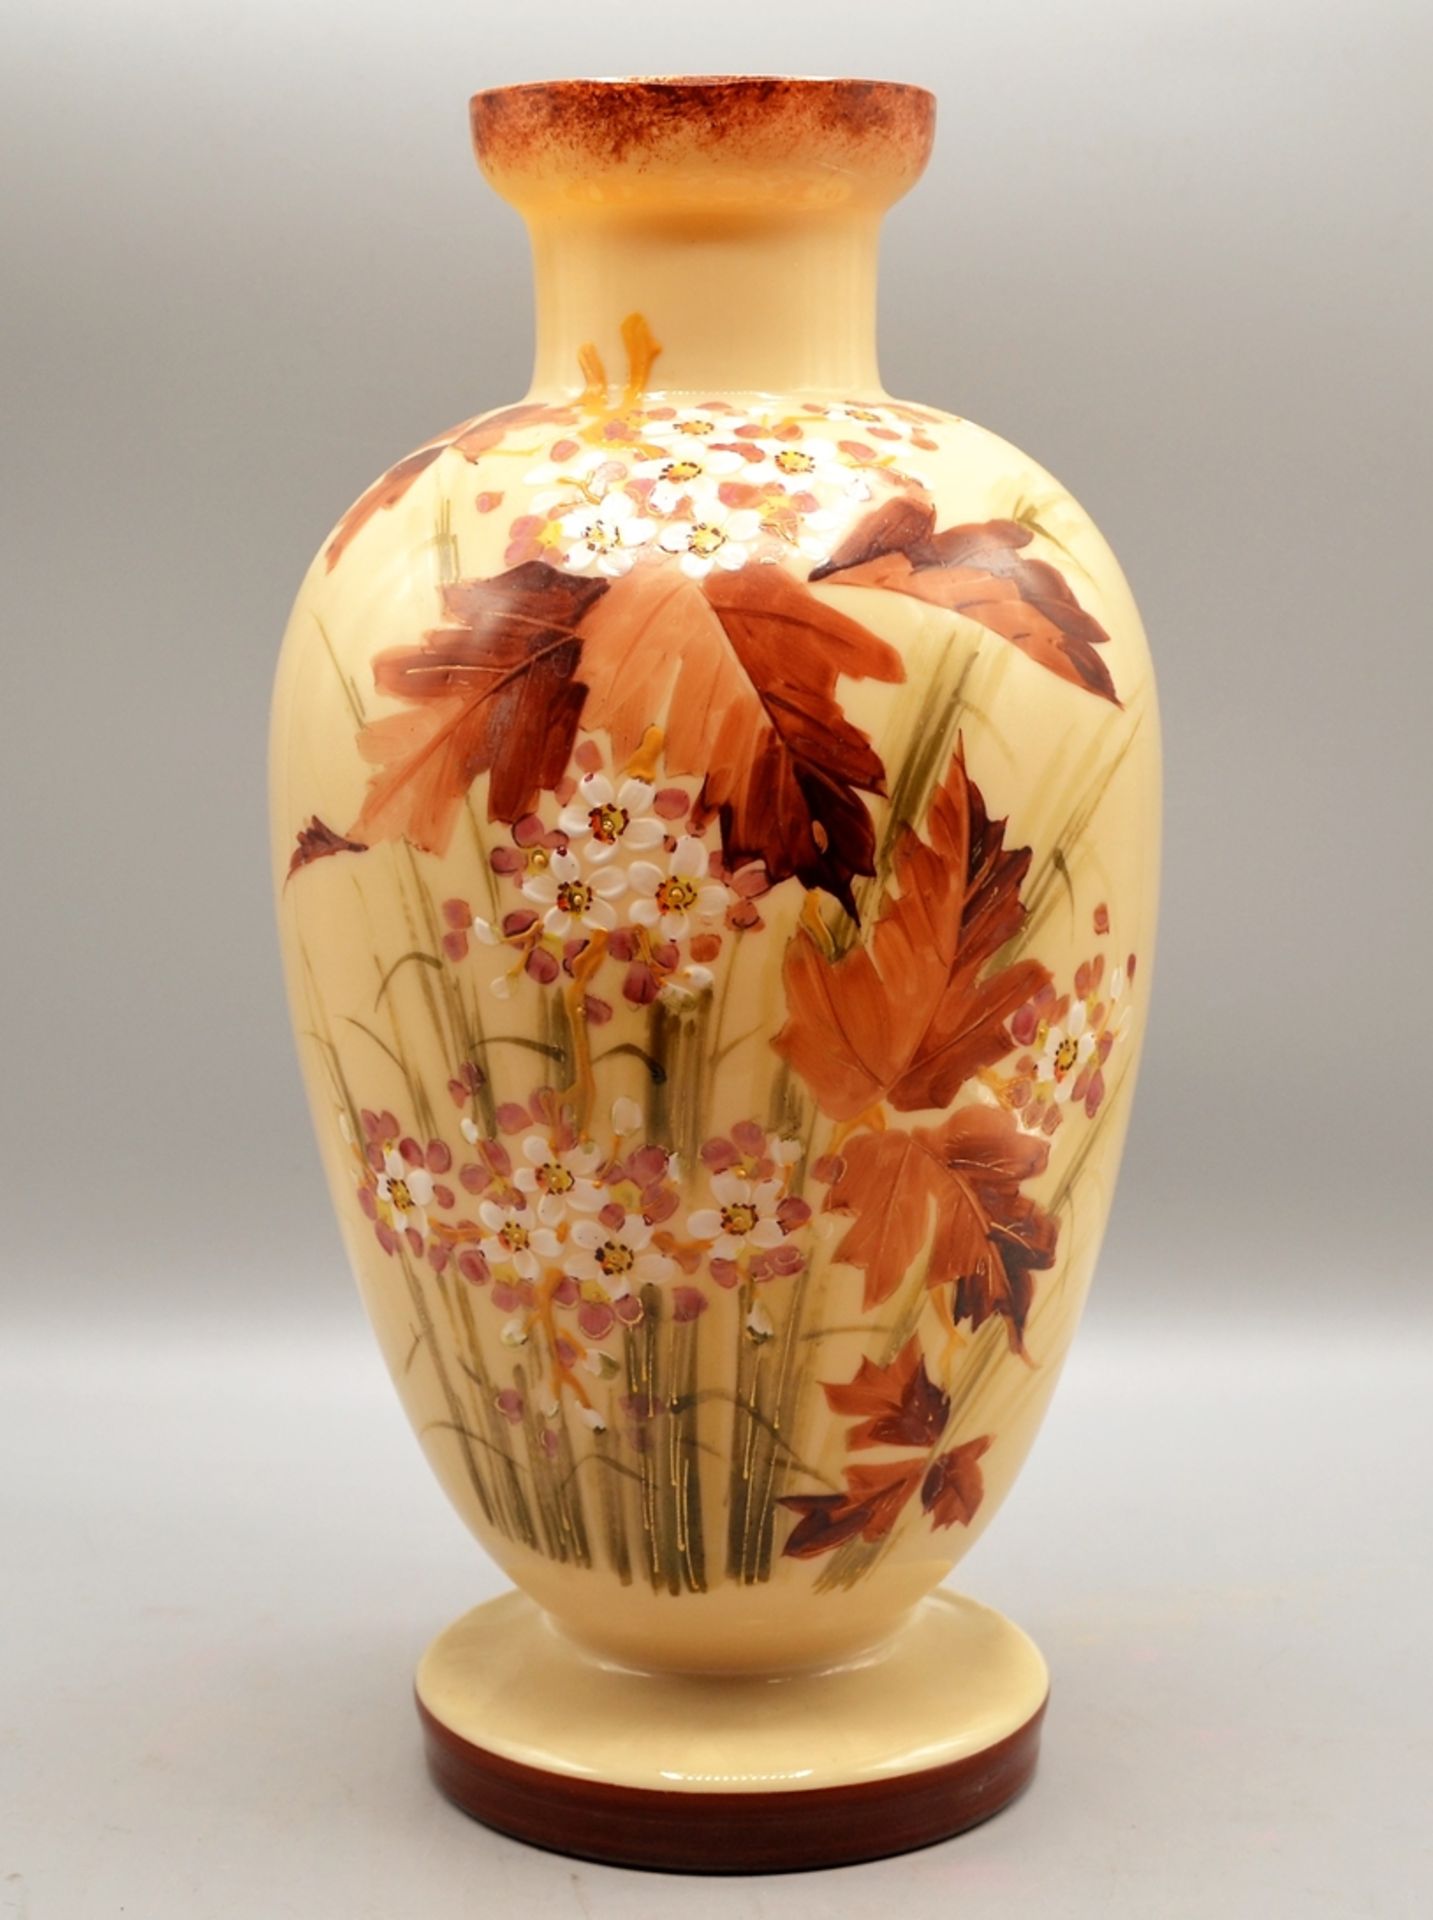 Milchglas Opalglas Vase um 1900, reiche florale Malerei, ca. 32 cm